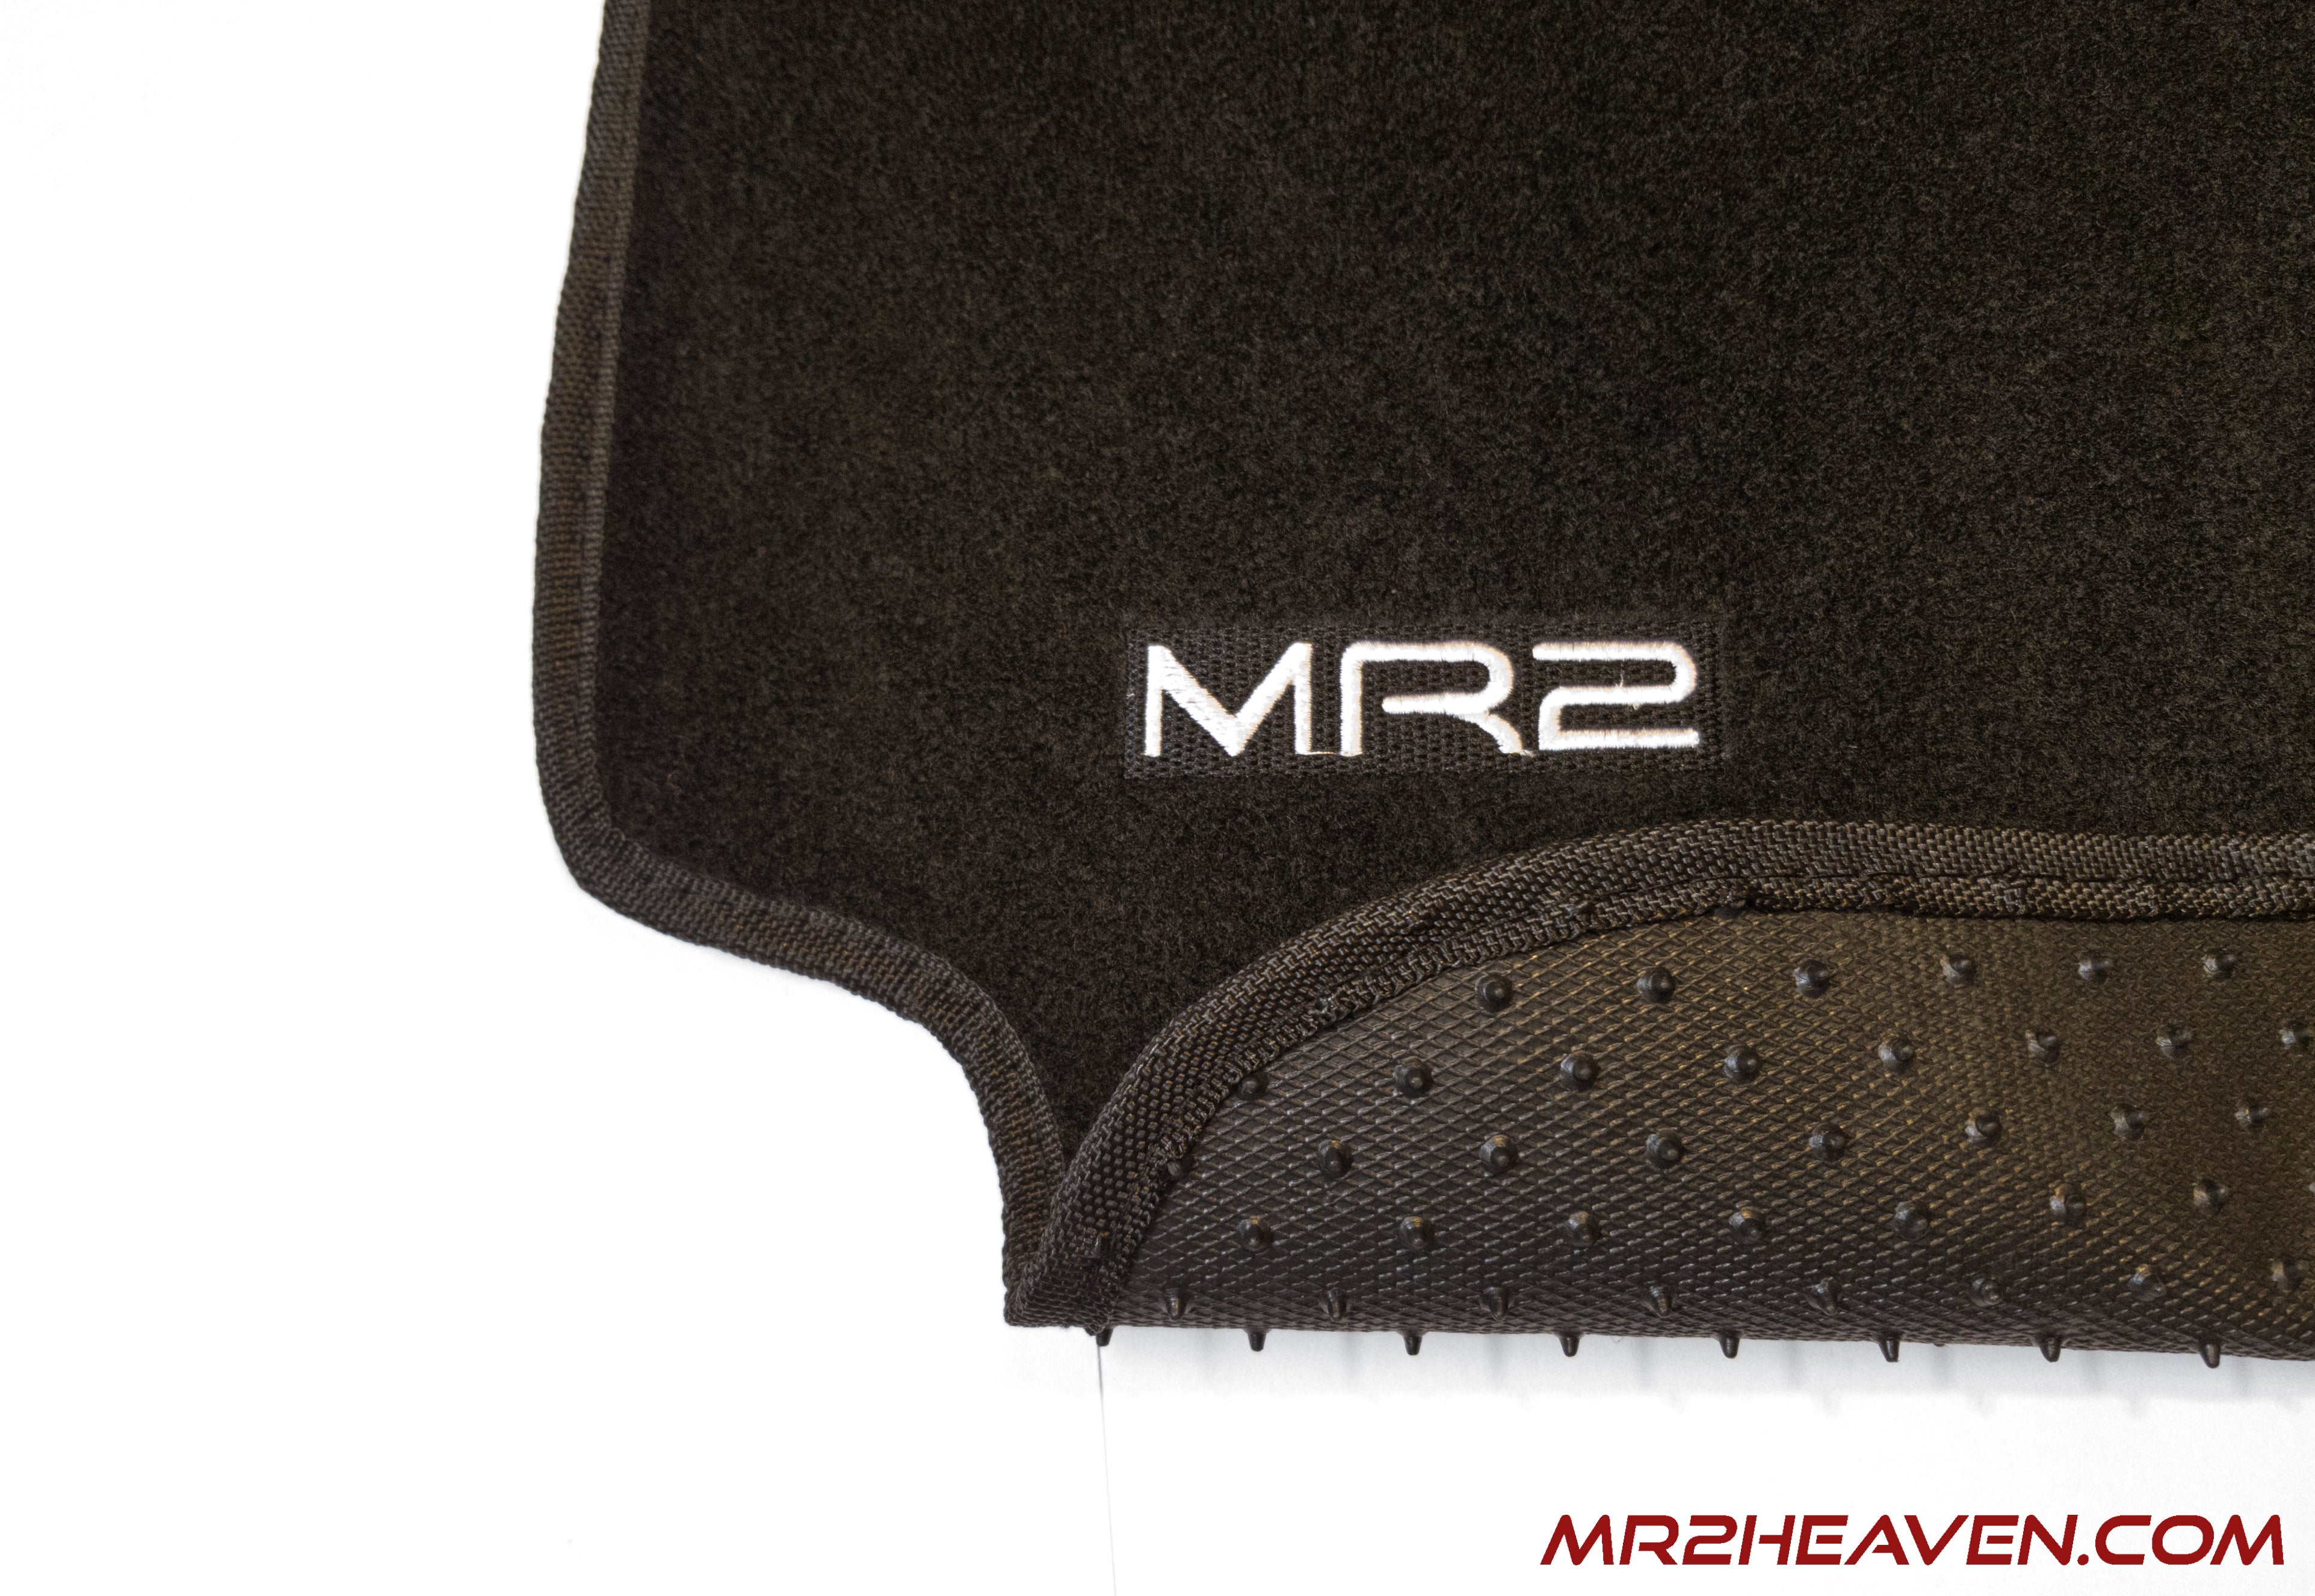 MR2Heaven Reproduction Floor Mats – MR2 Heaven